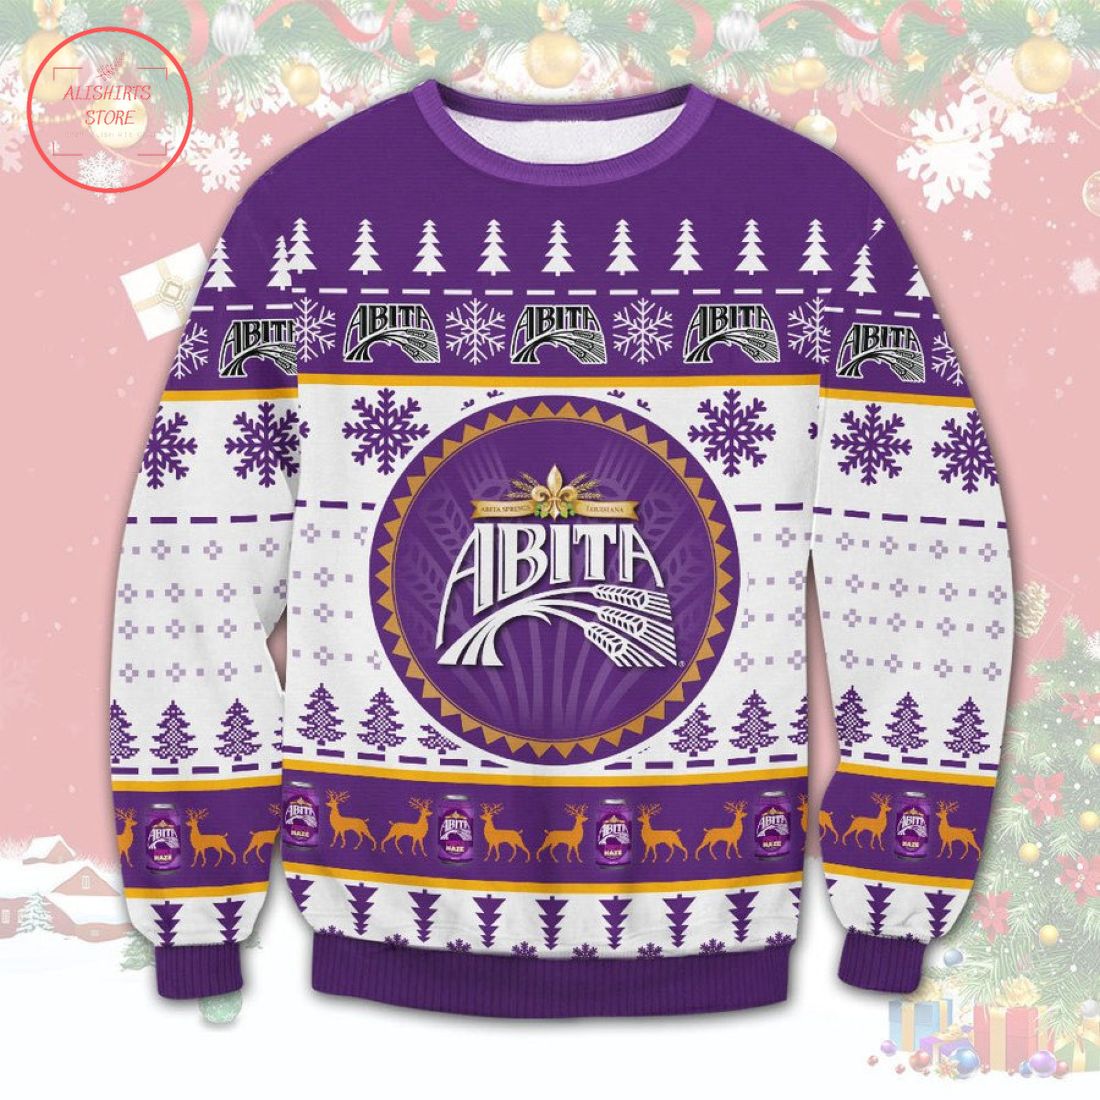 Abita Beer Ugly Christmas Sweater